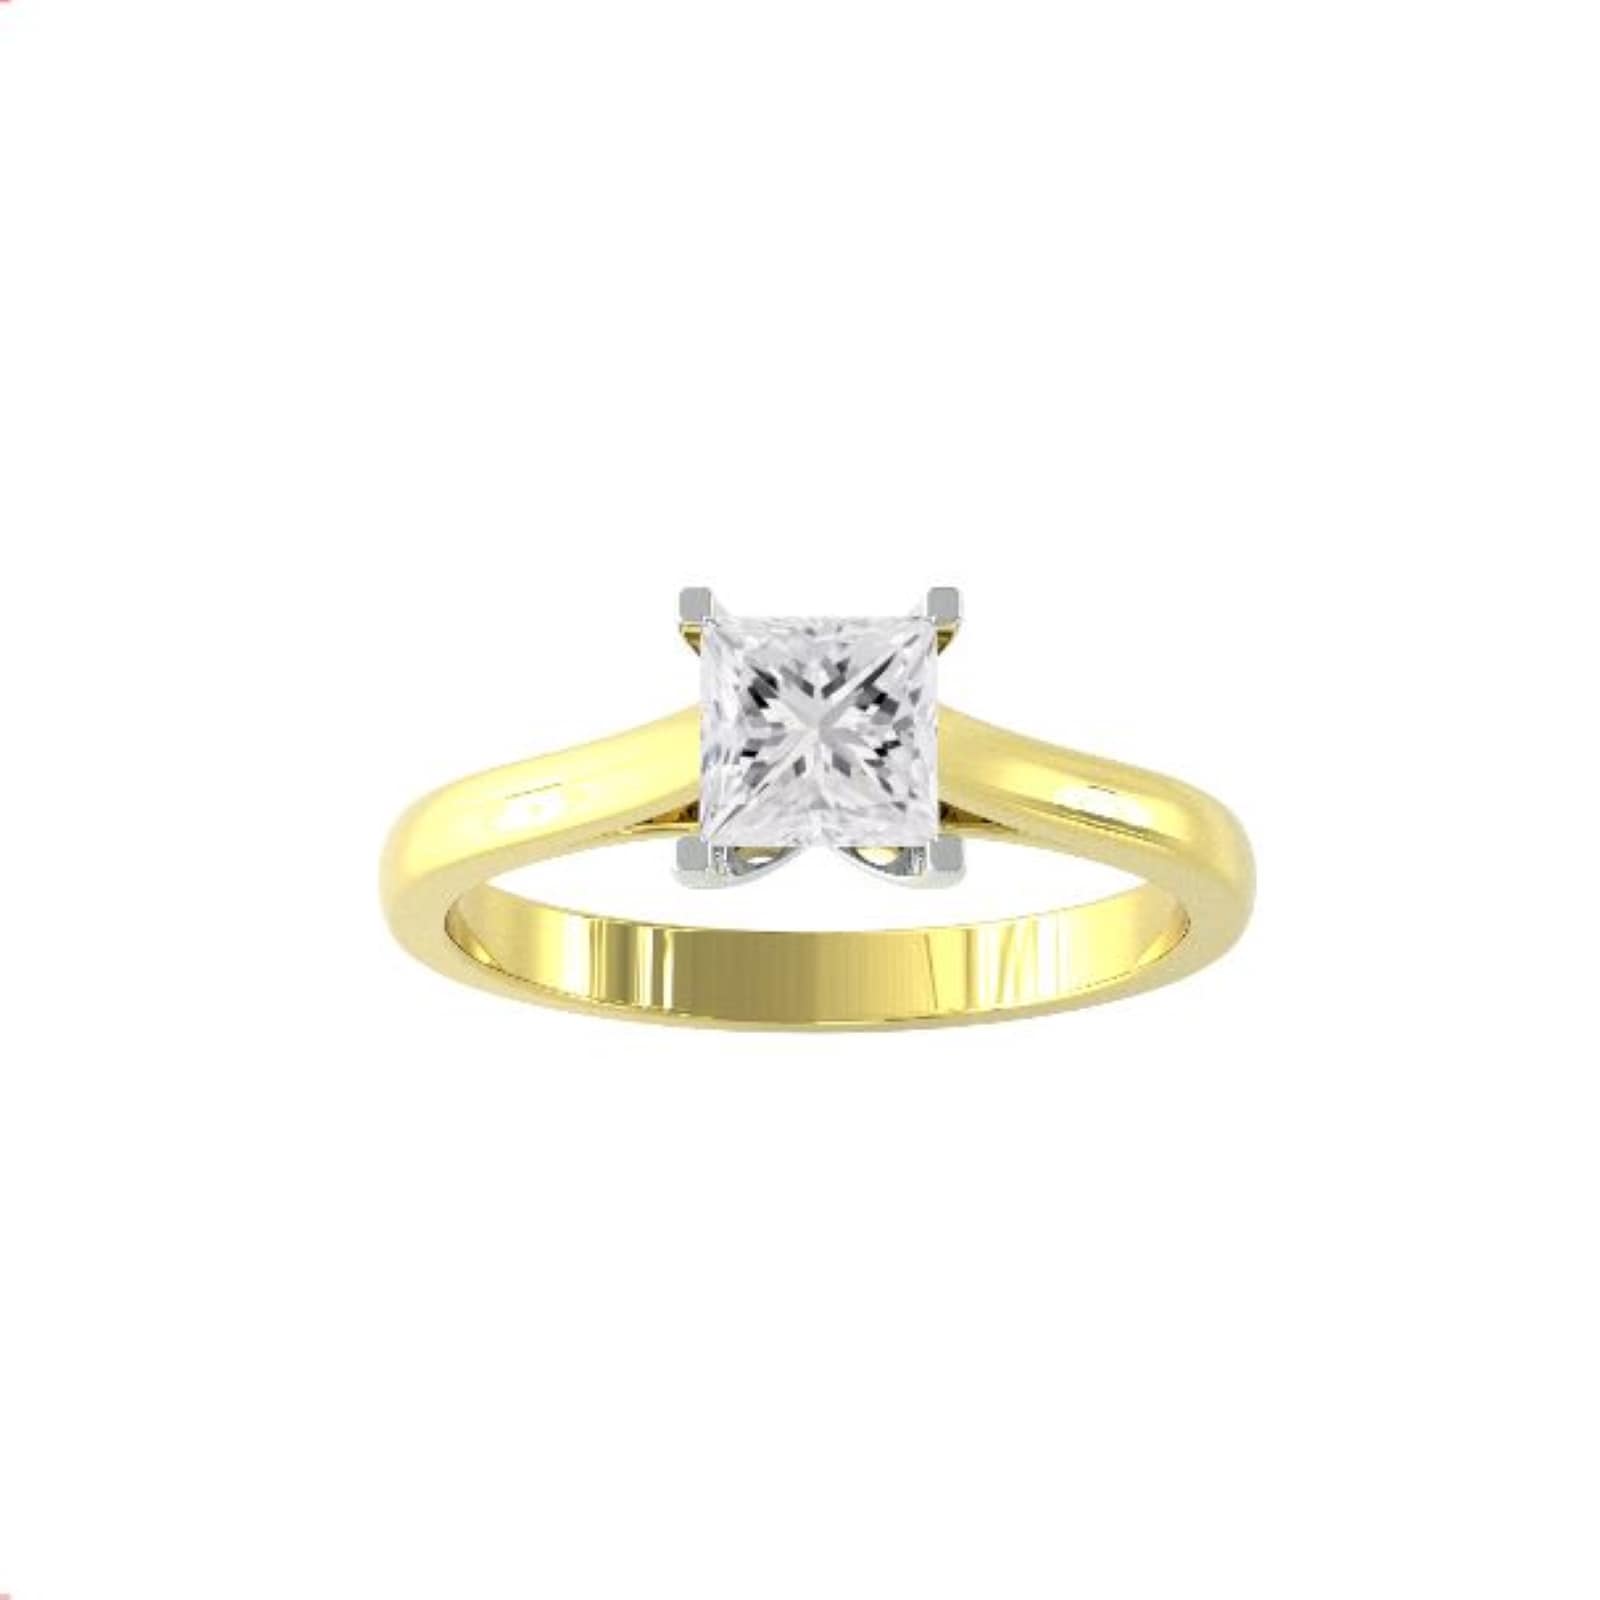 18ct Yellow Gold 0.75cttw Princess Cut Diamond Ring - Ring Size L.5